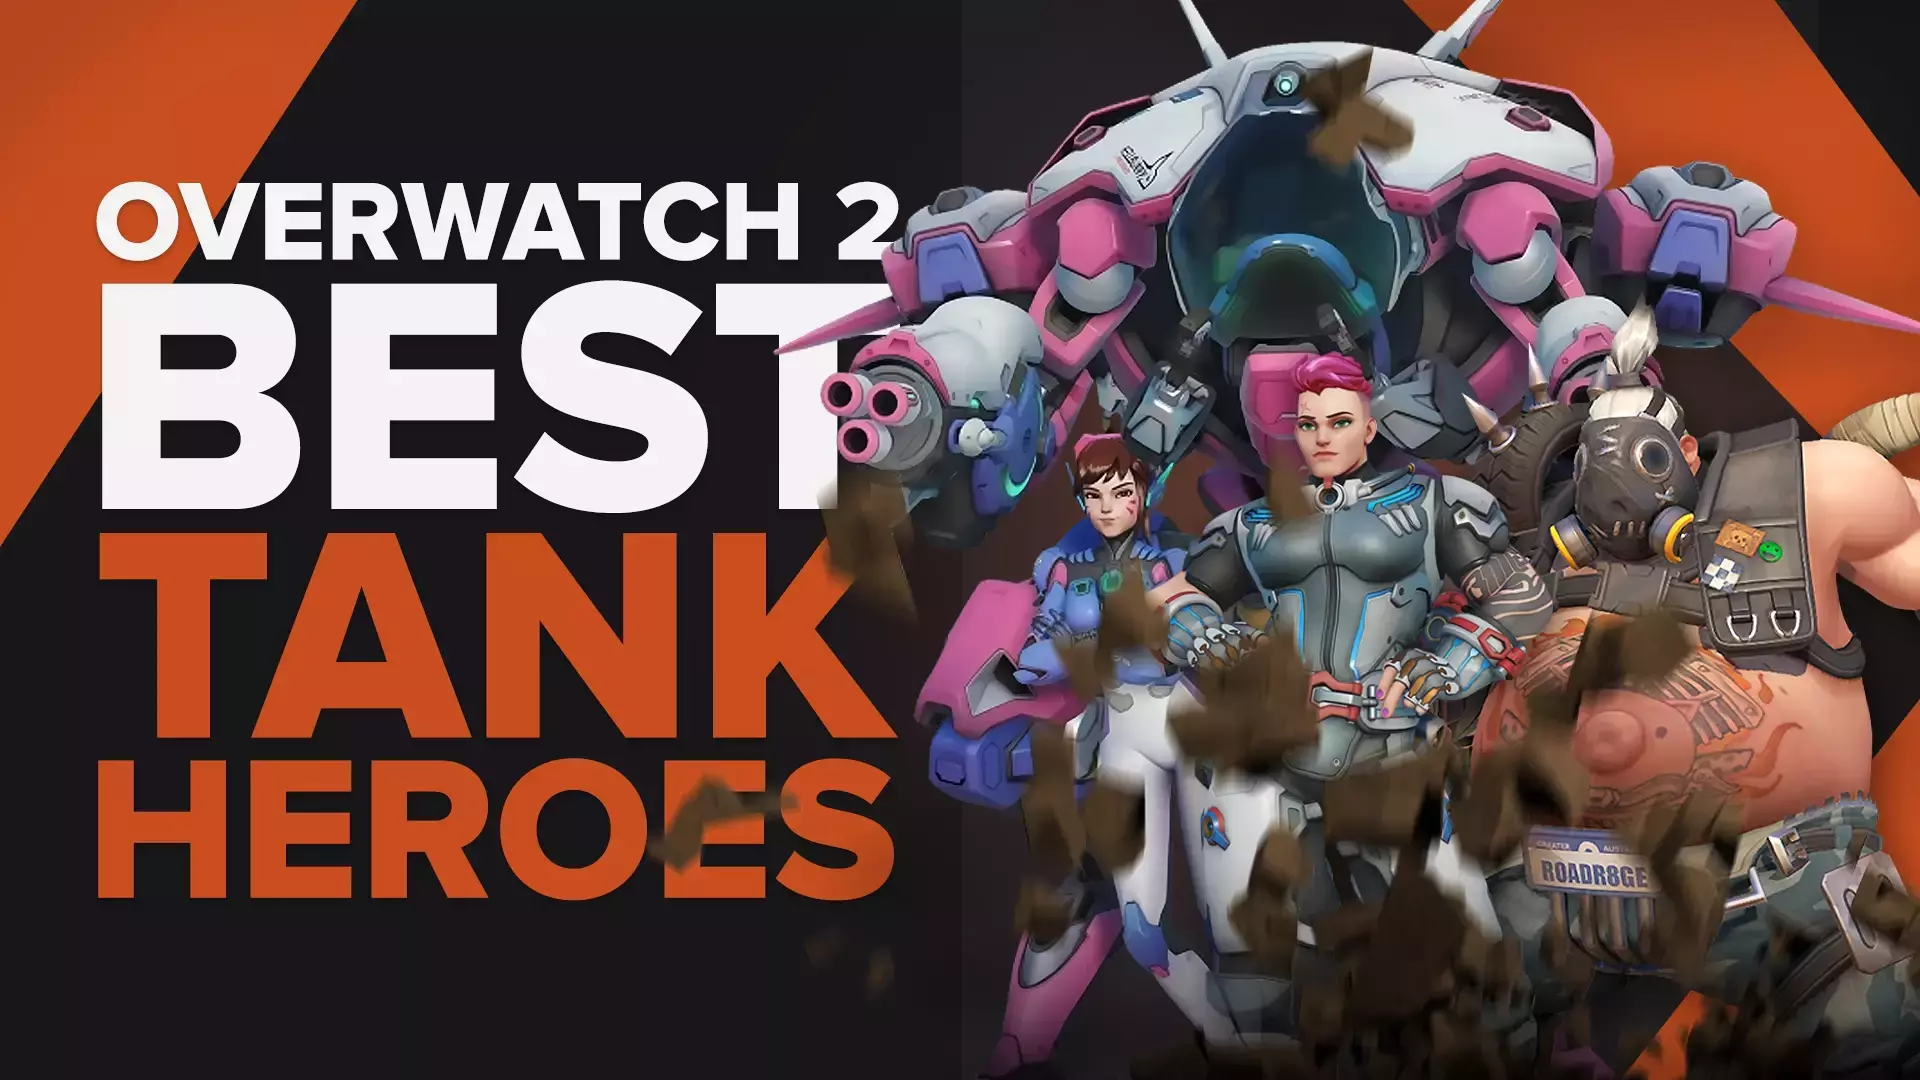 5 Best Tank Heroes in Overwatch 2